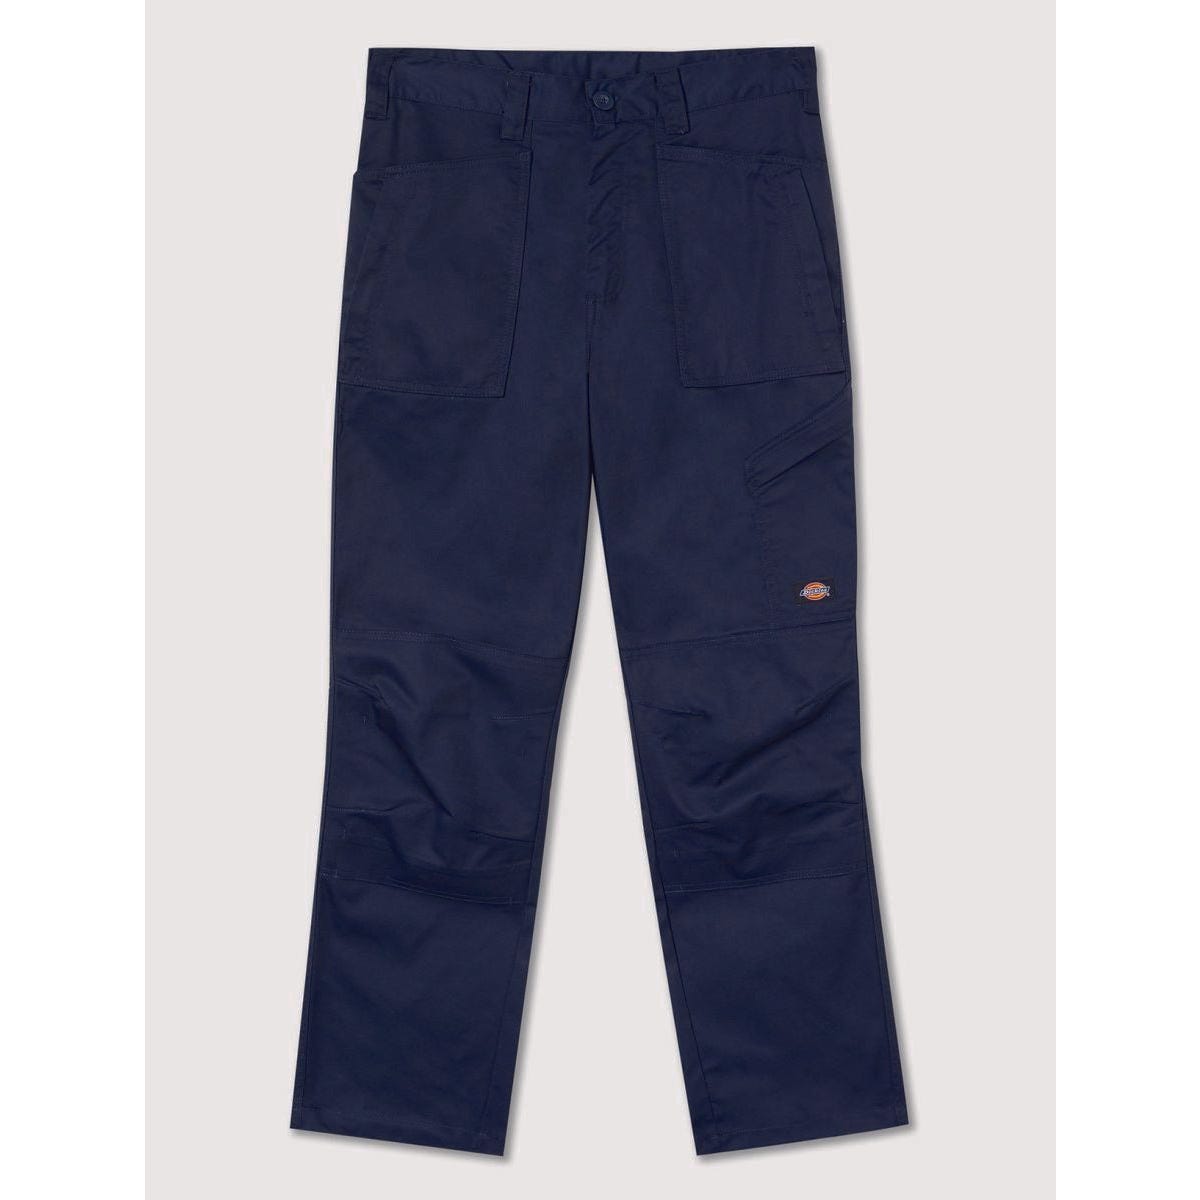 Pantalon de travail Action Flex bleu marine - Dickies - Taille 52 5